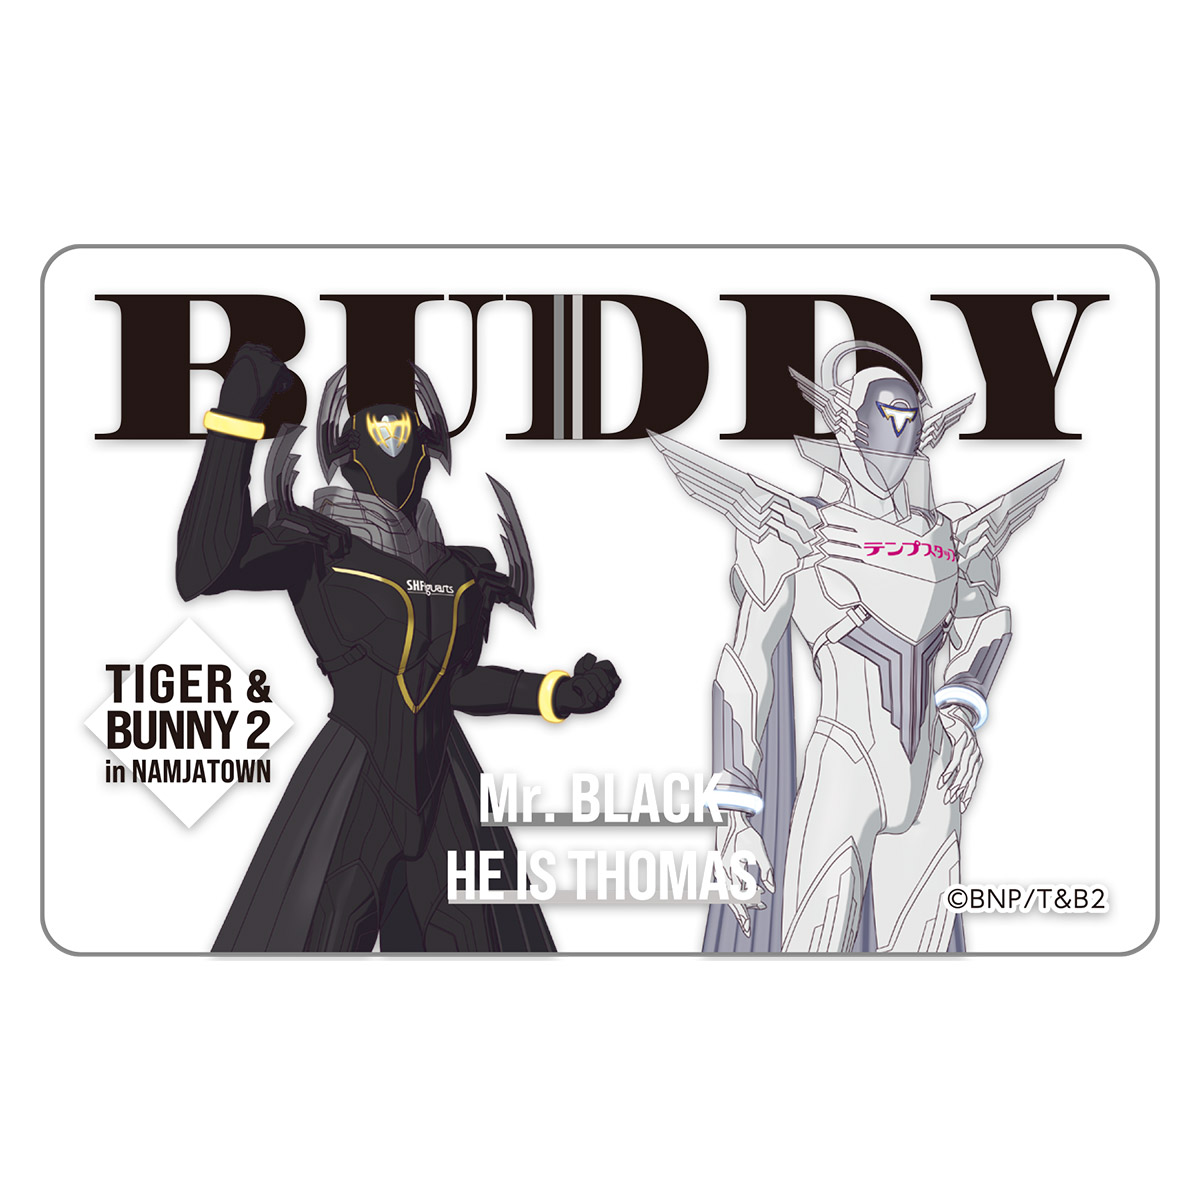 TIGER & BUNNY 2 ㏌ NAMJATOWN 折紙サイクロンをさがせ！ | ナムコ